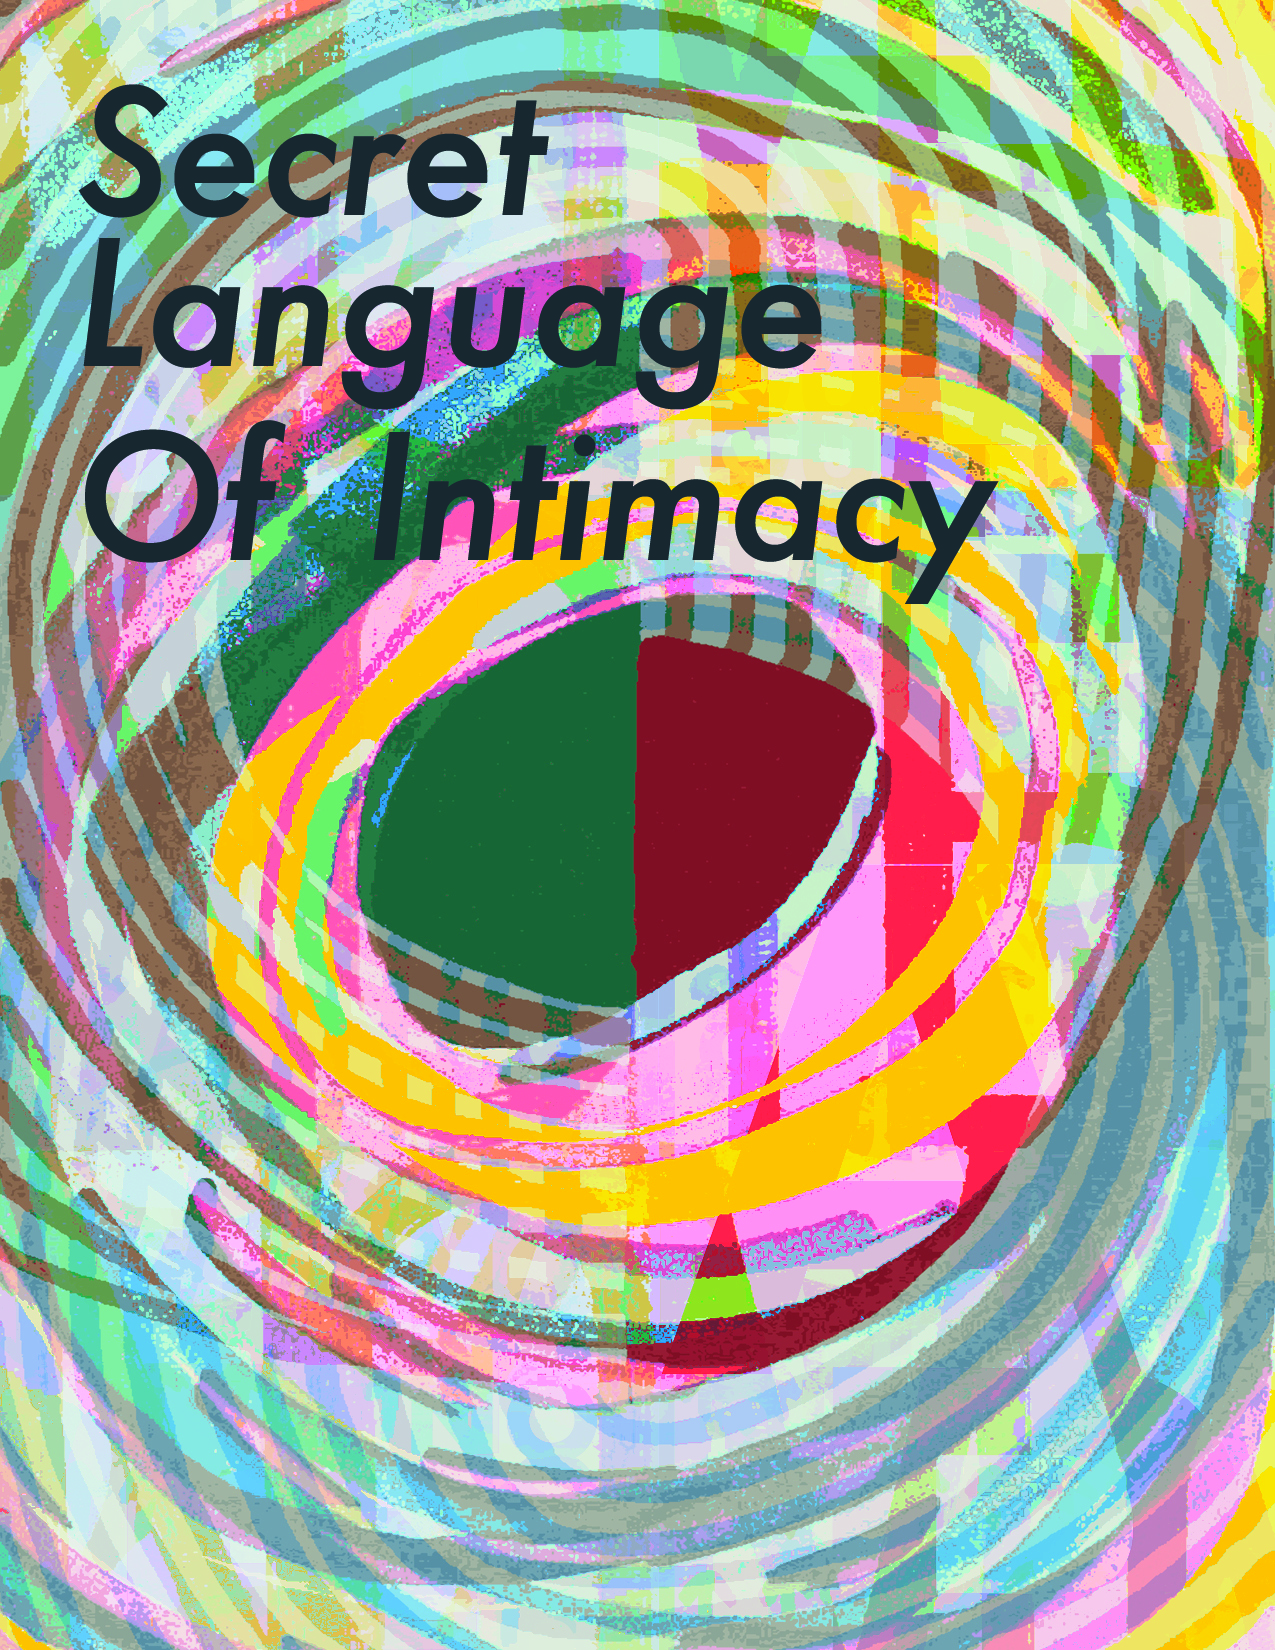 Artists’ Talk: Secret Language of Intimacy